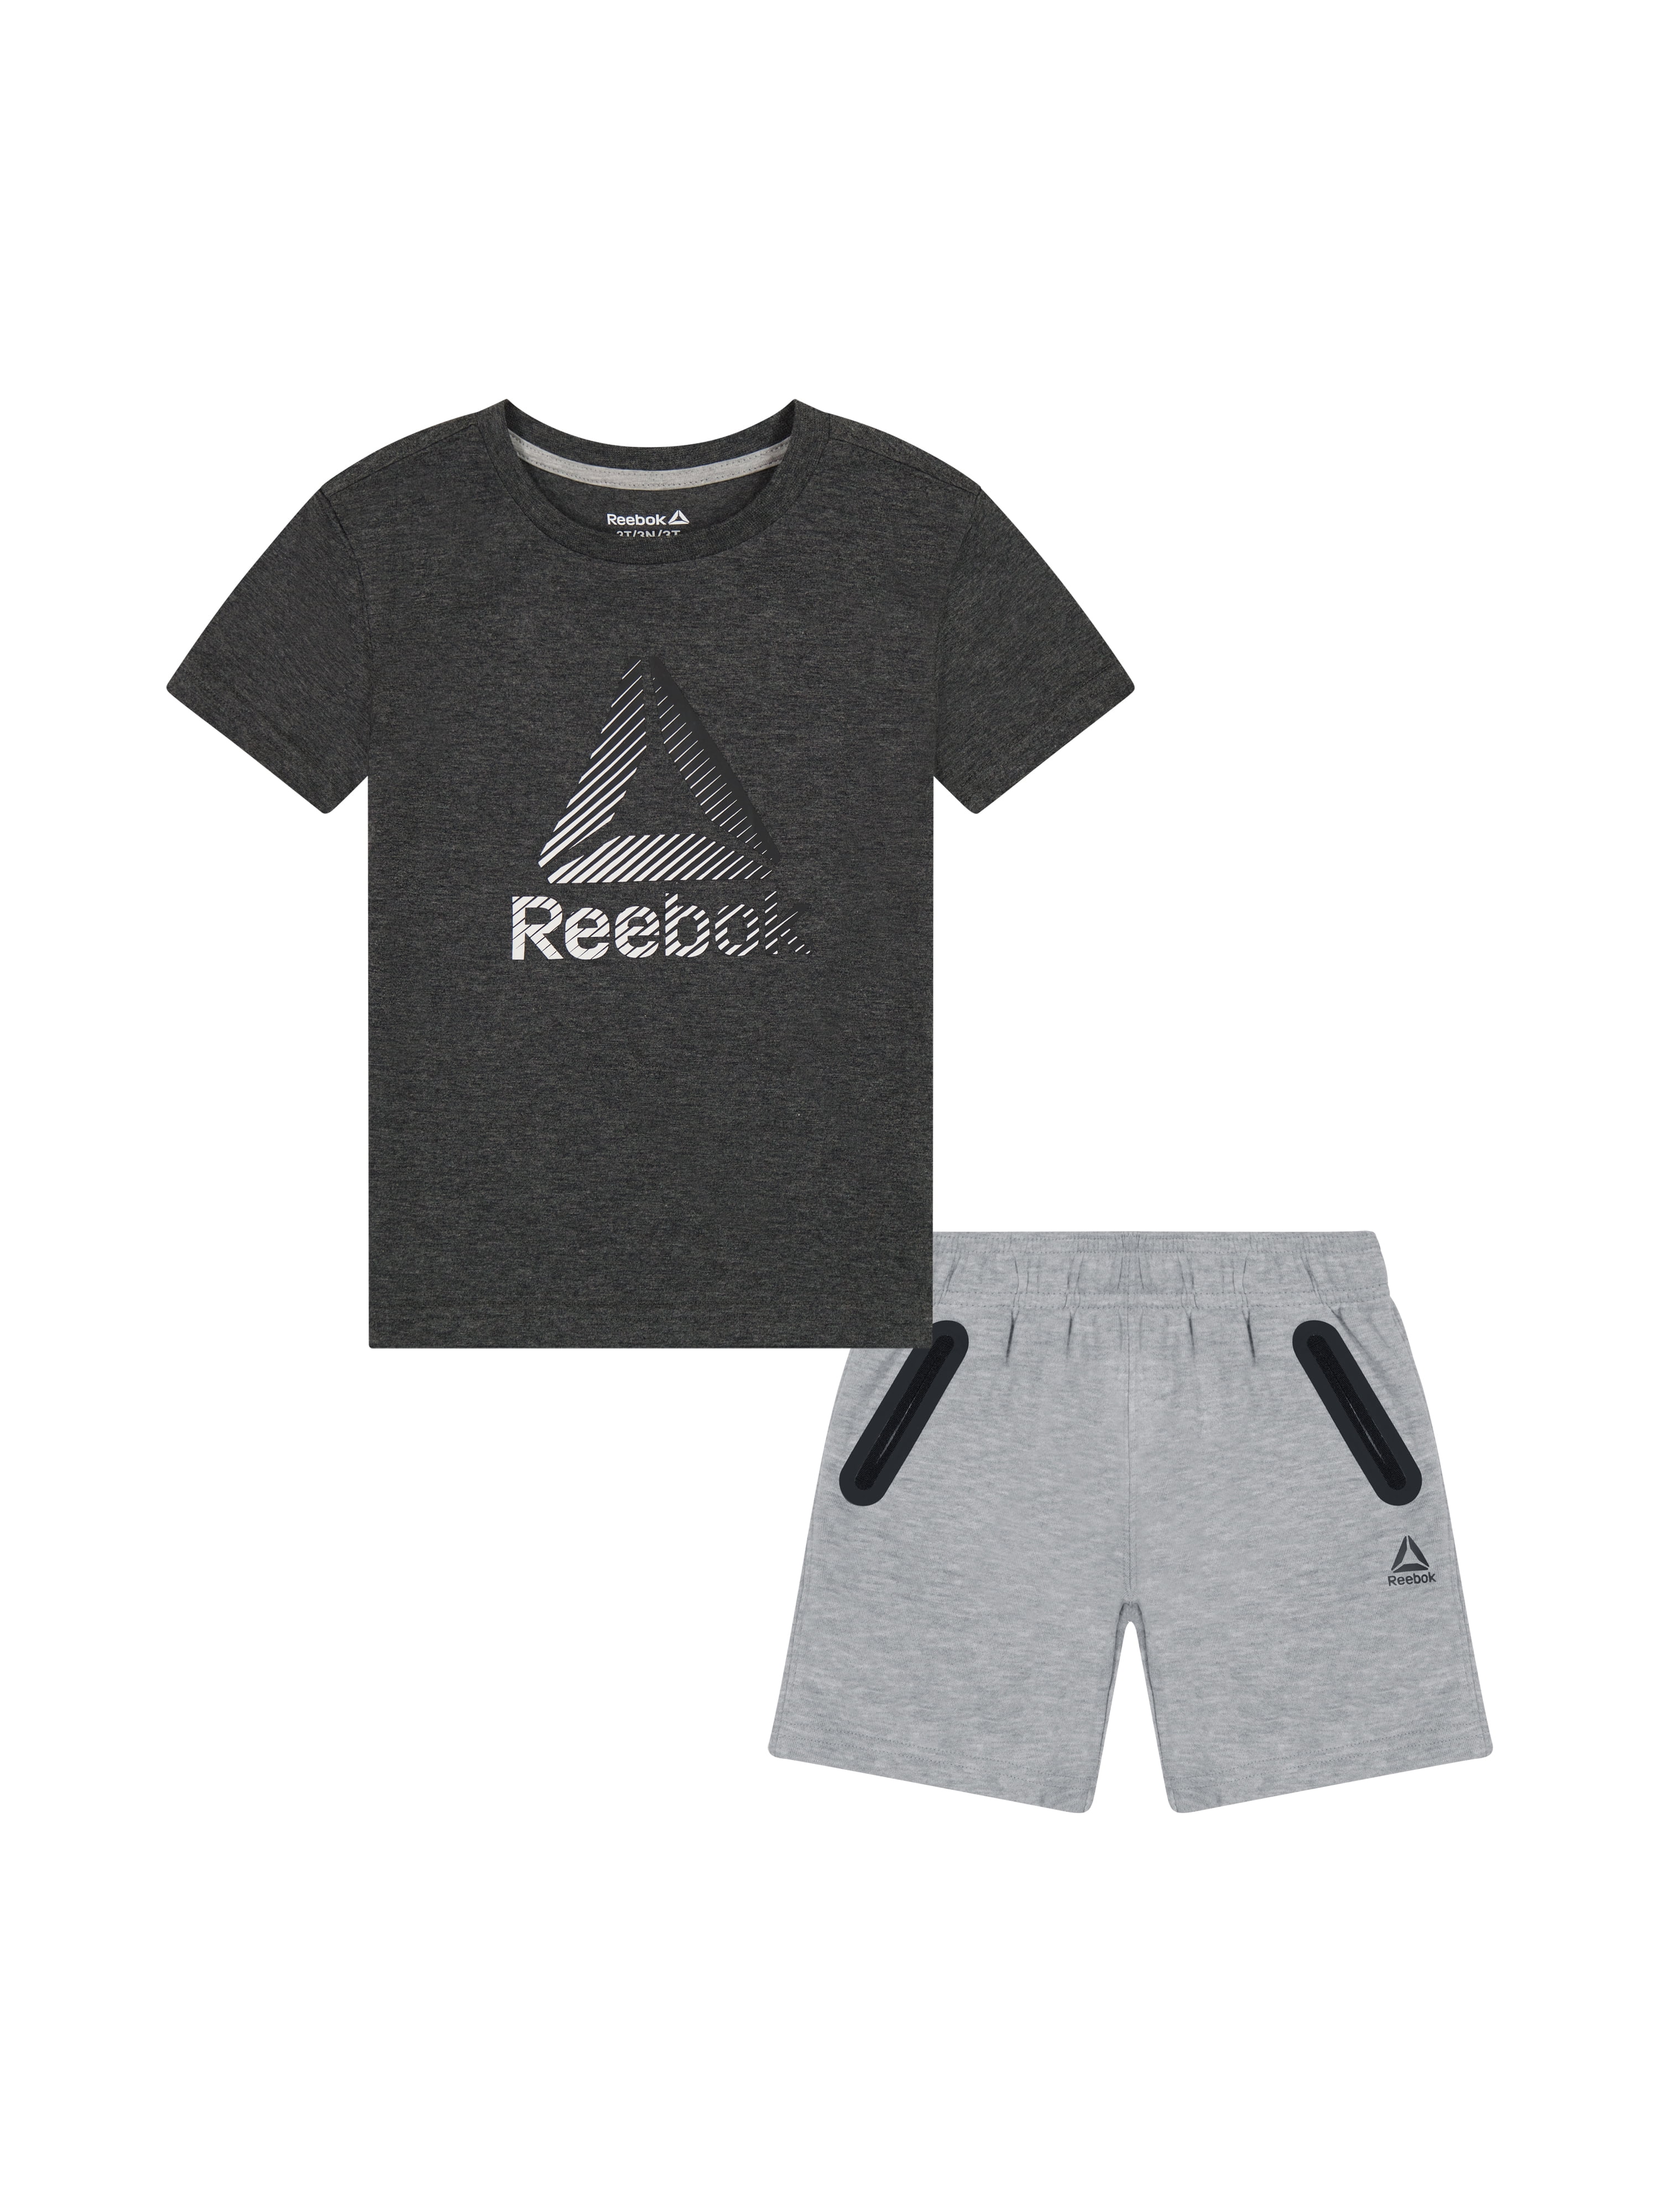 Reebok Toddler Boys T-Shirt and Short, 2-Piece Outfit Set